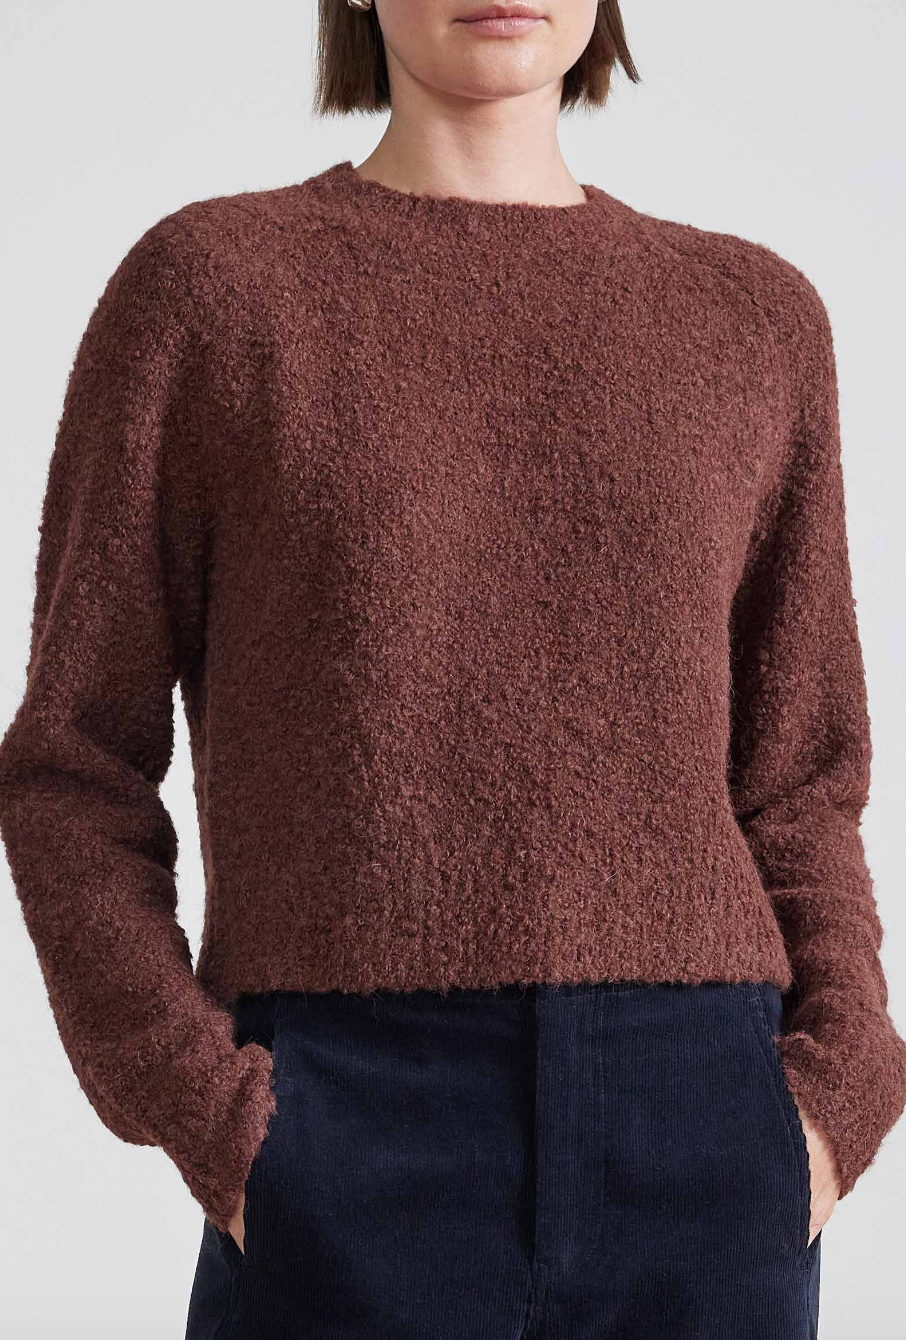 Liisa  Textured Crop Sweater